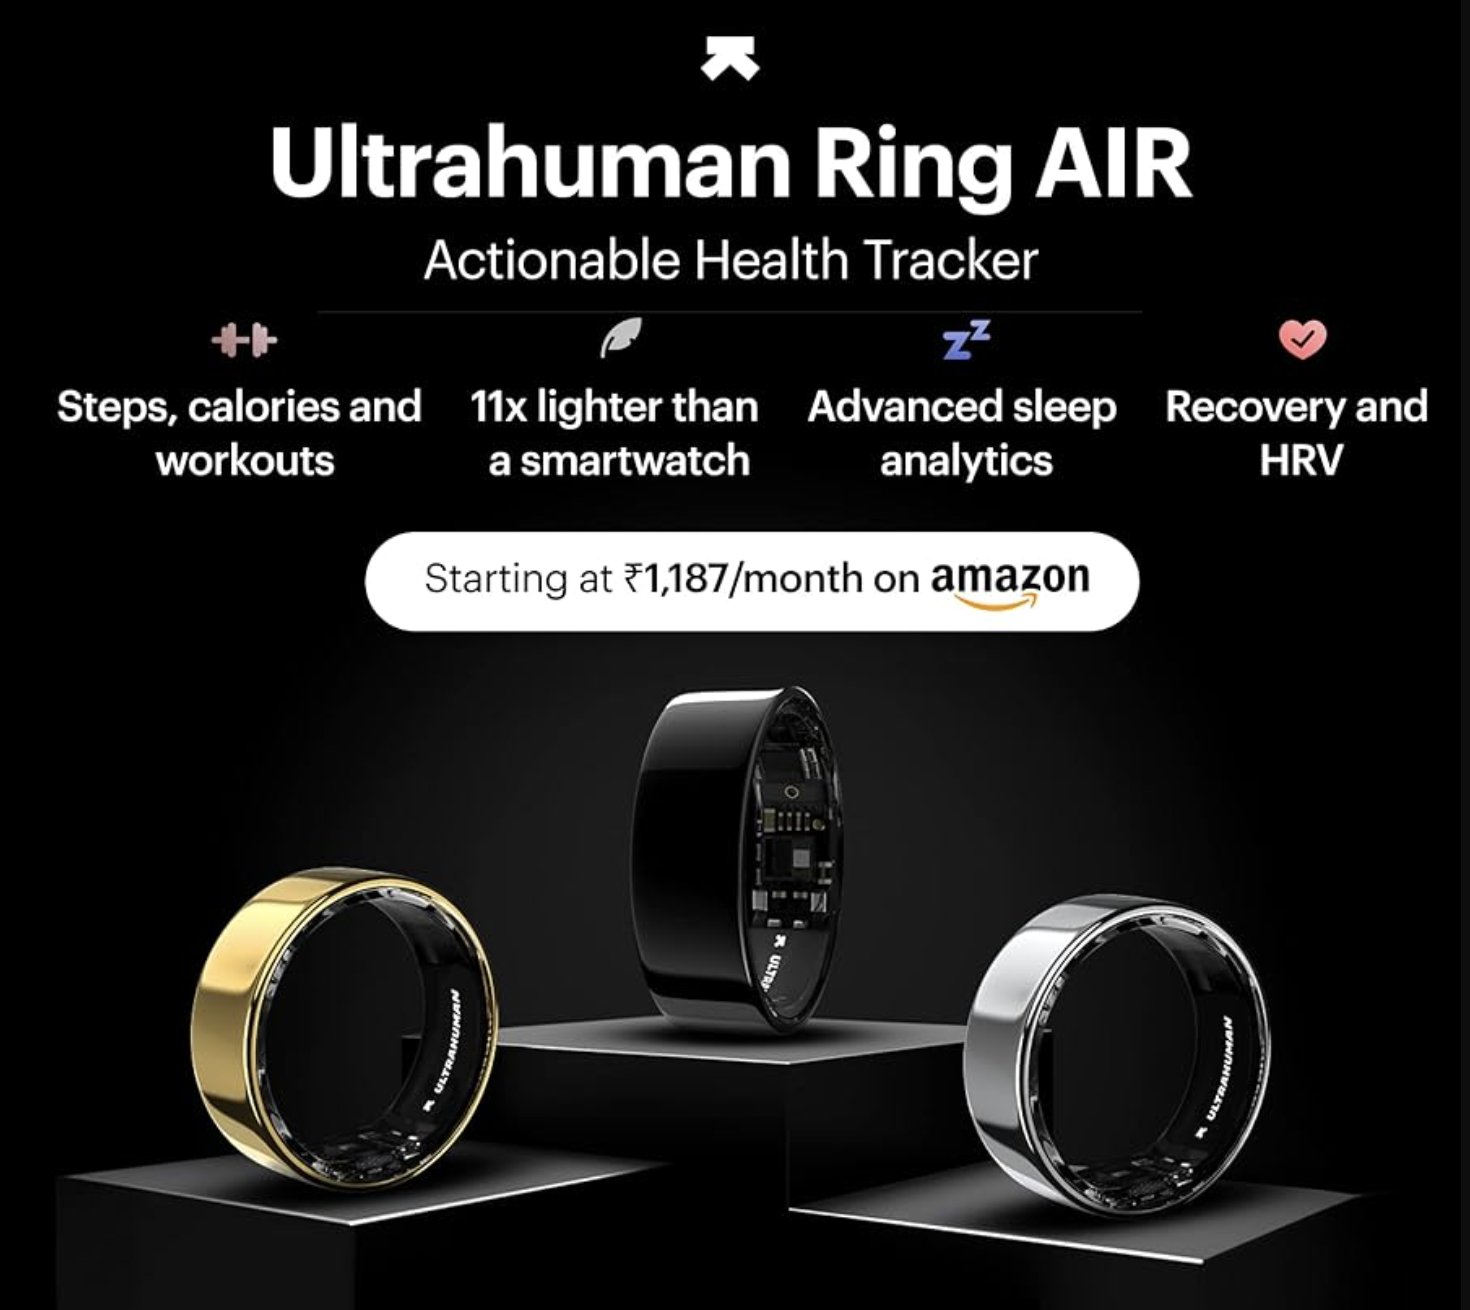 Ultrahuman Ring Air review